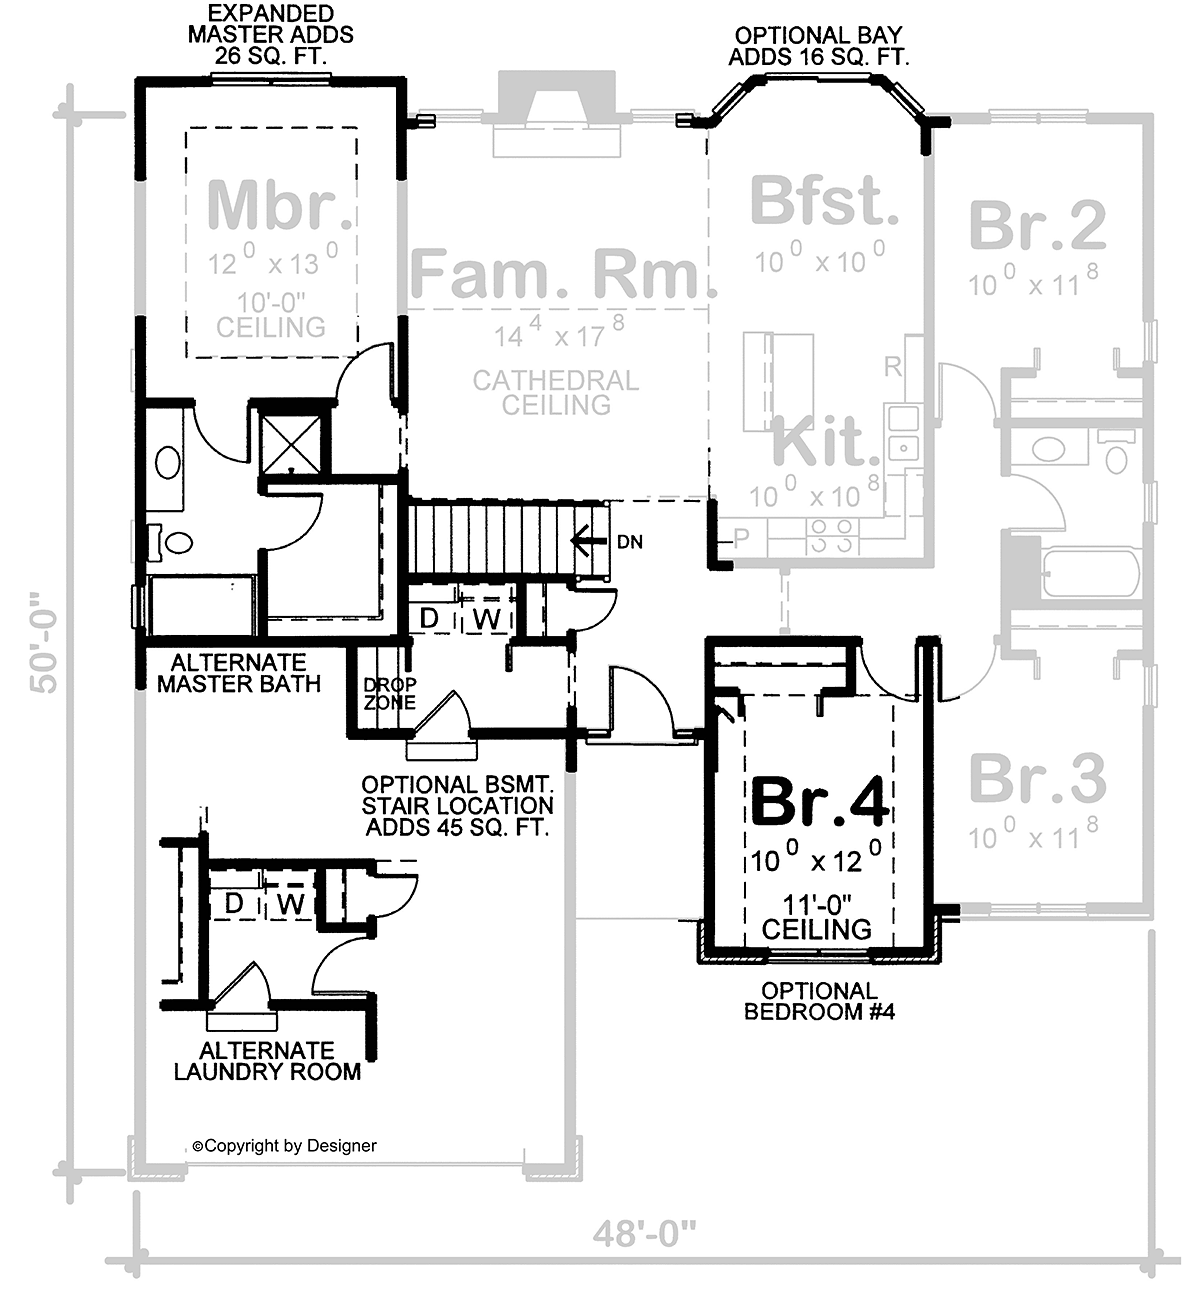 House Plan 66642 Alternate Level One